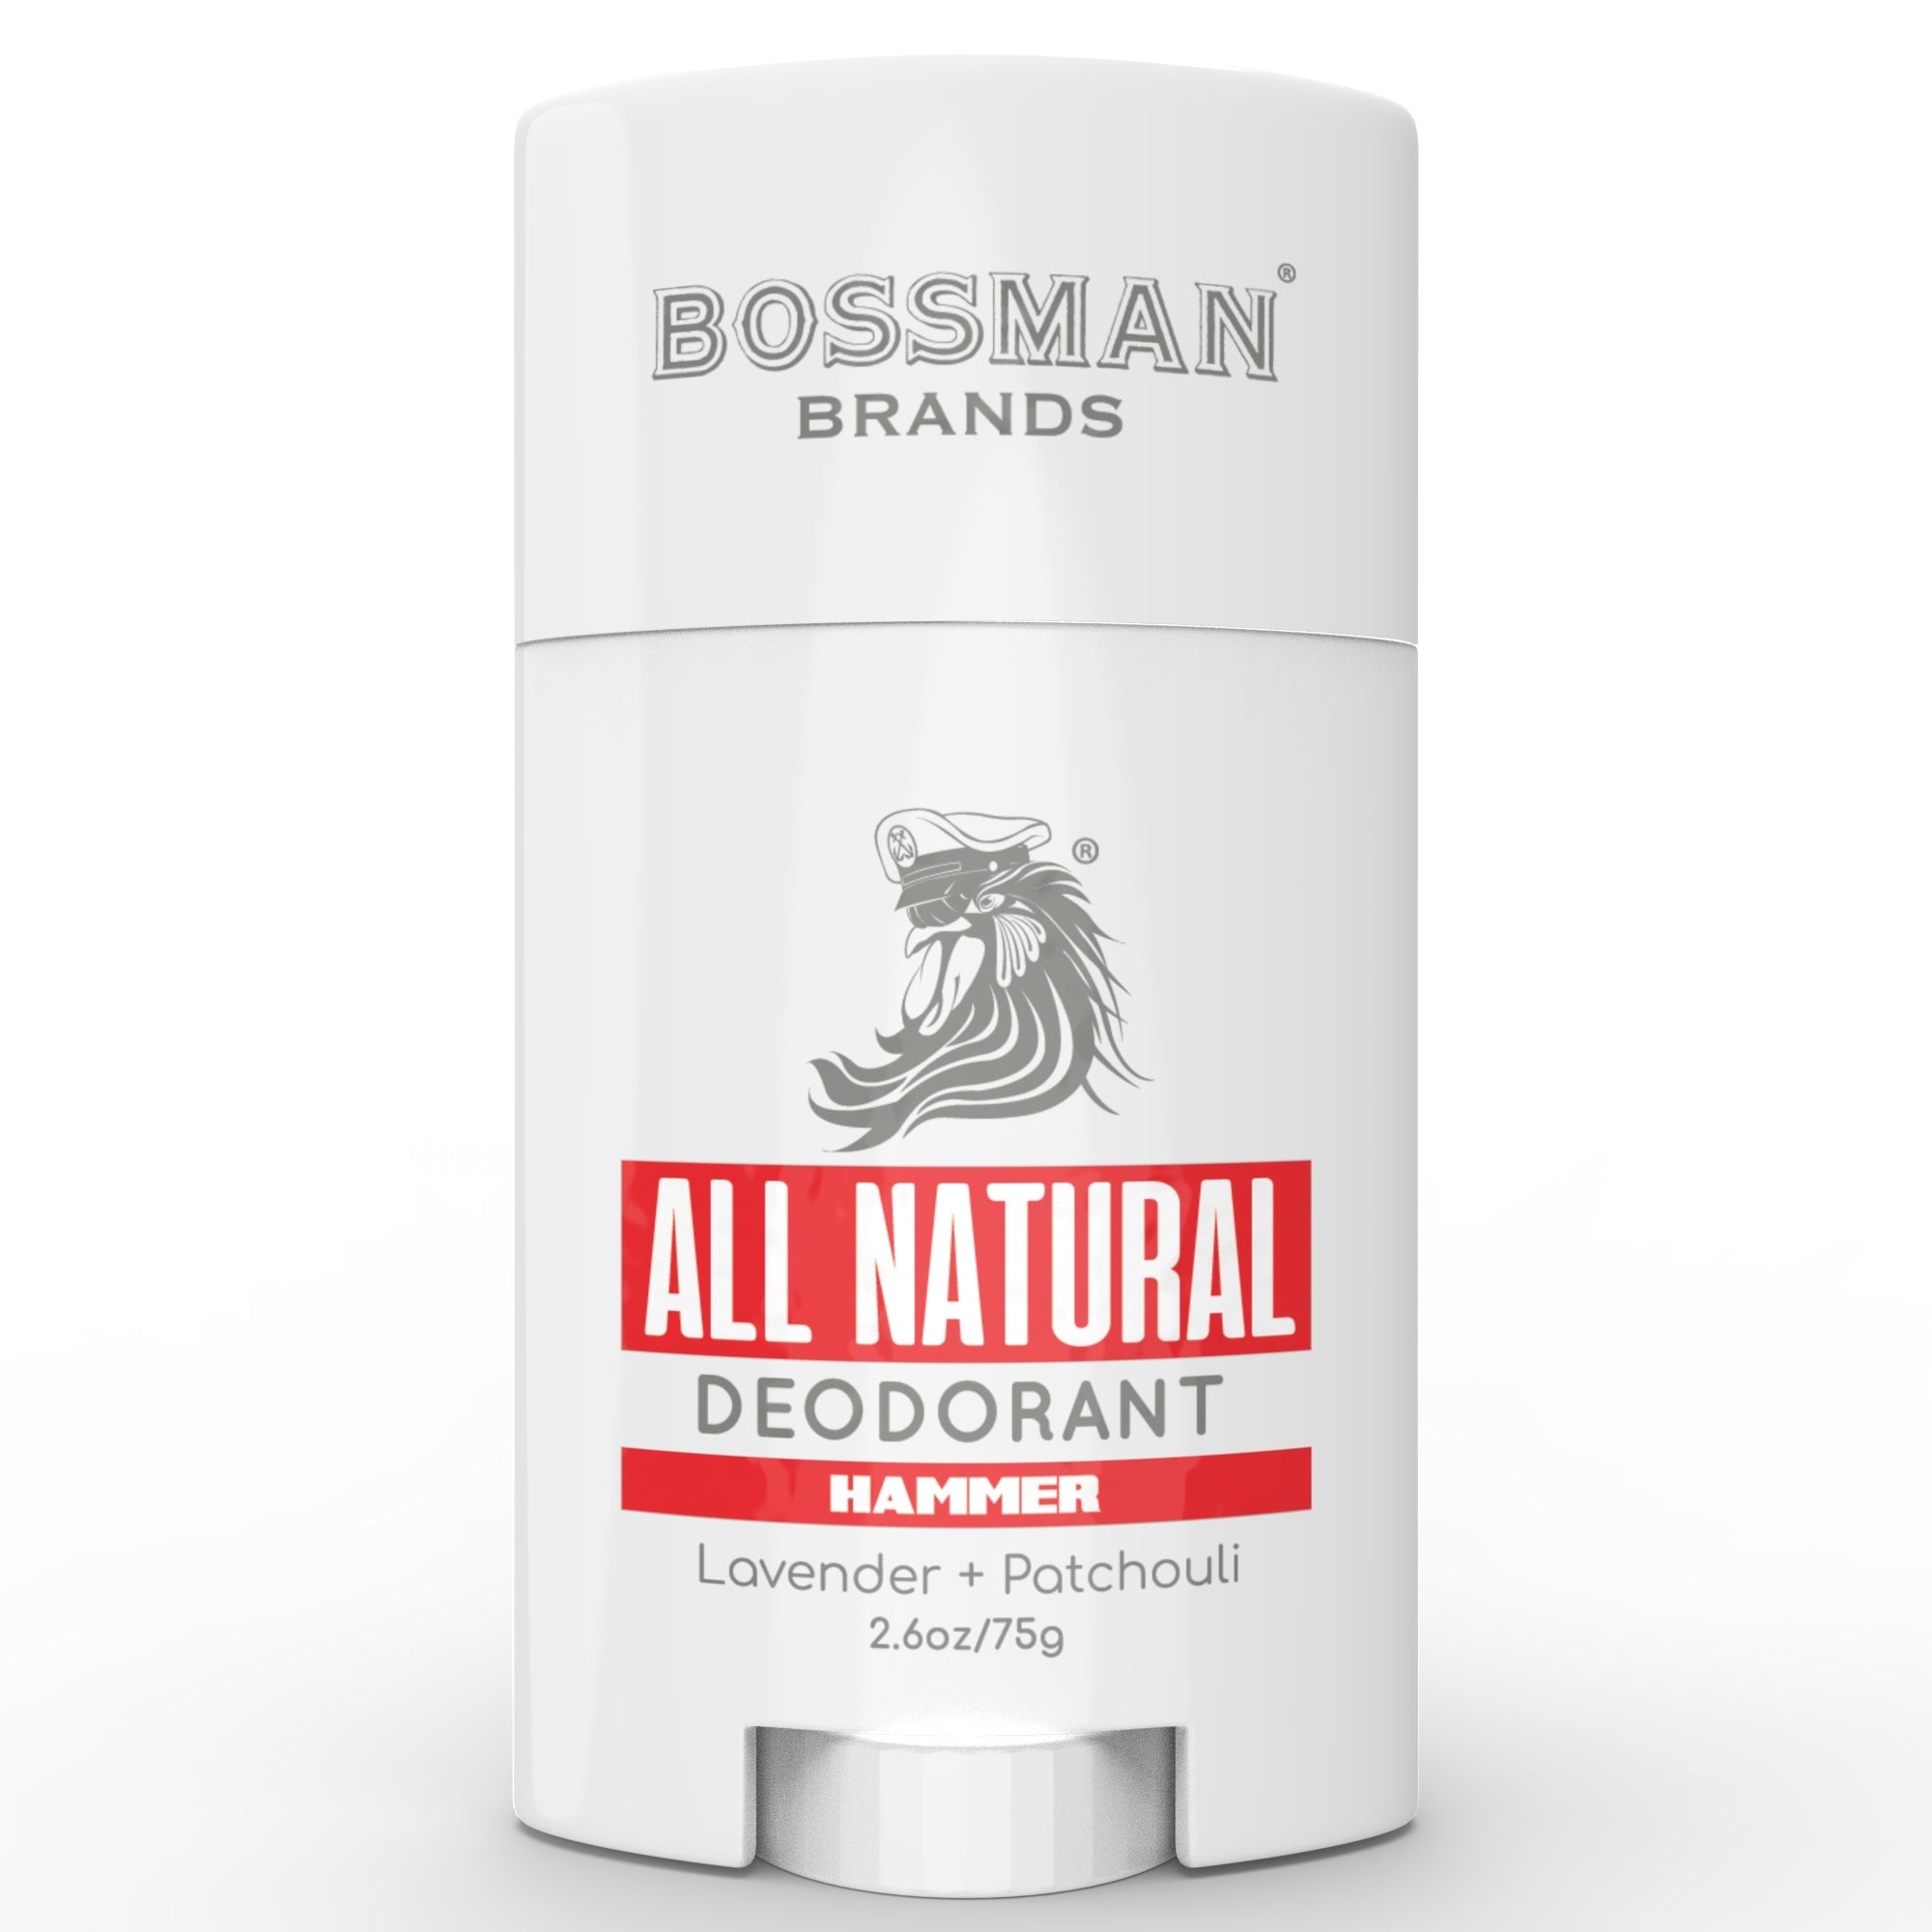 All Natural Deodorant Bossman Brands